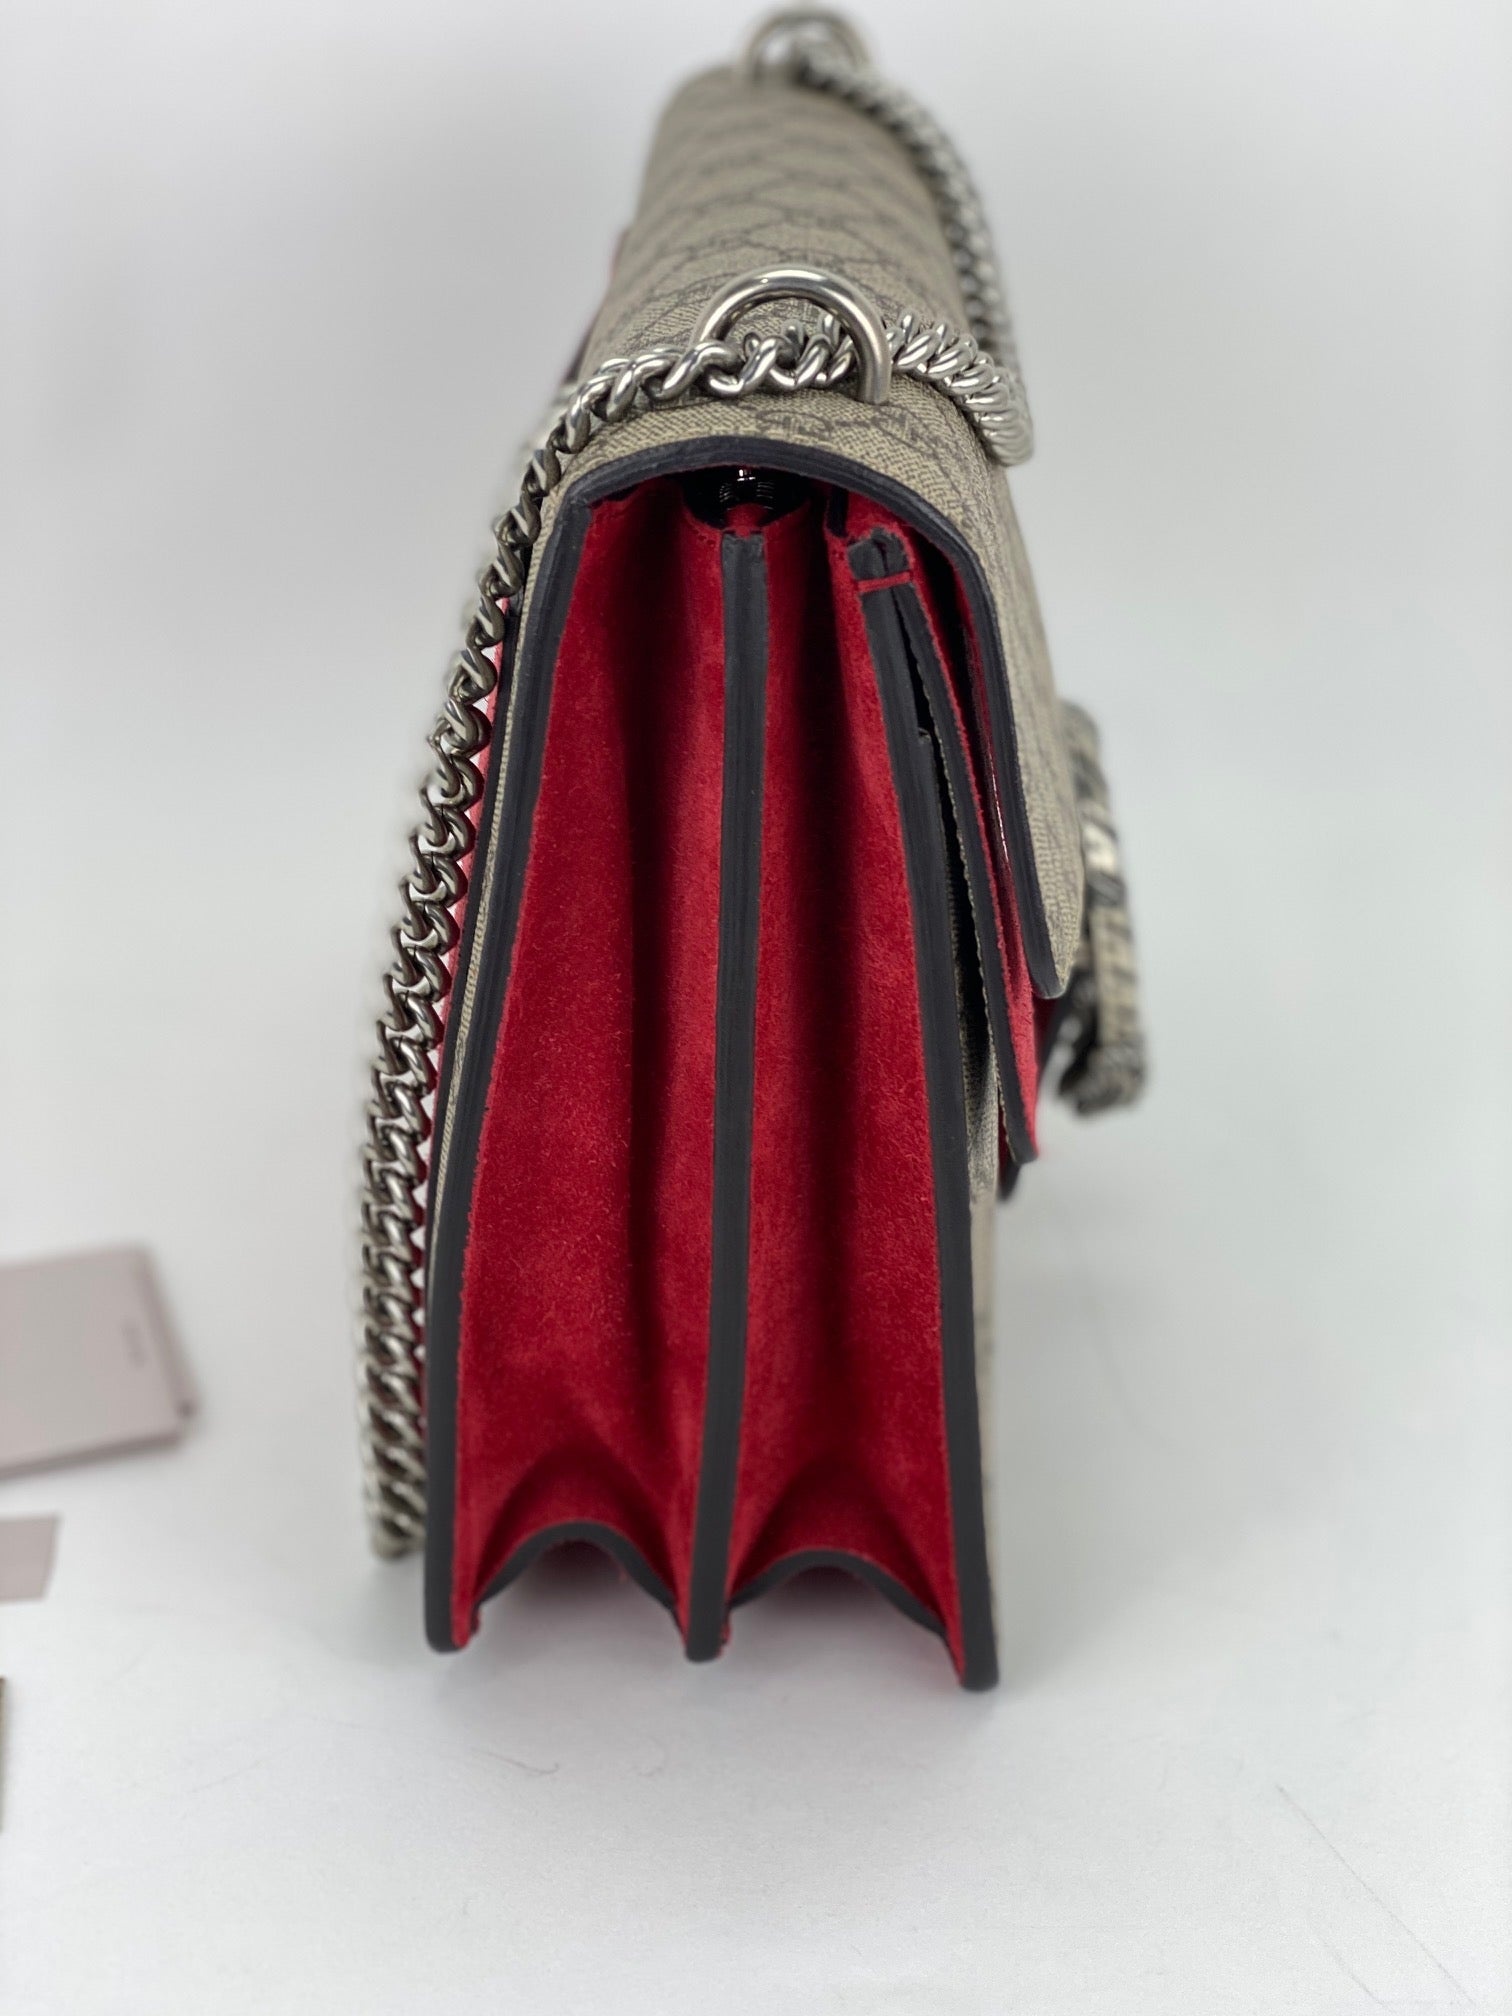 Gucci Dionysus Medium GG Supreme Monogram Shoulder Bag Beige 403348